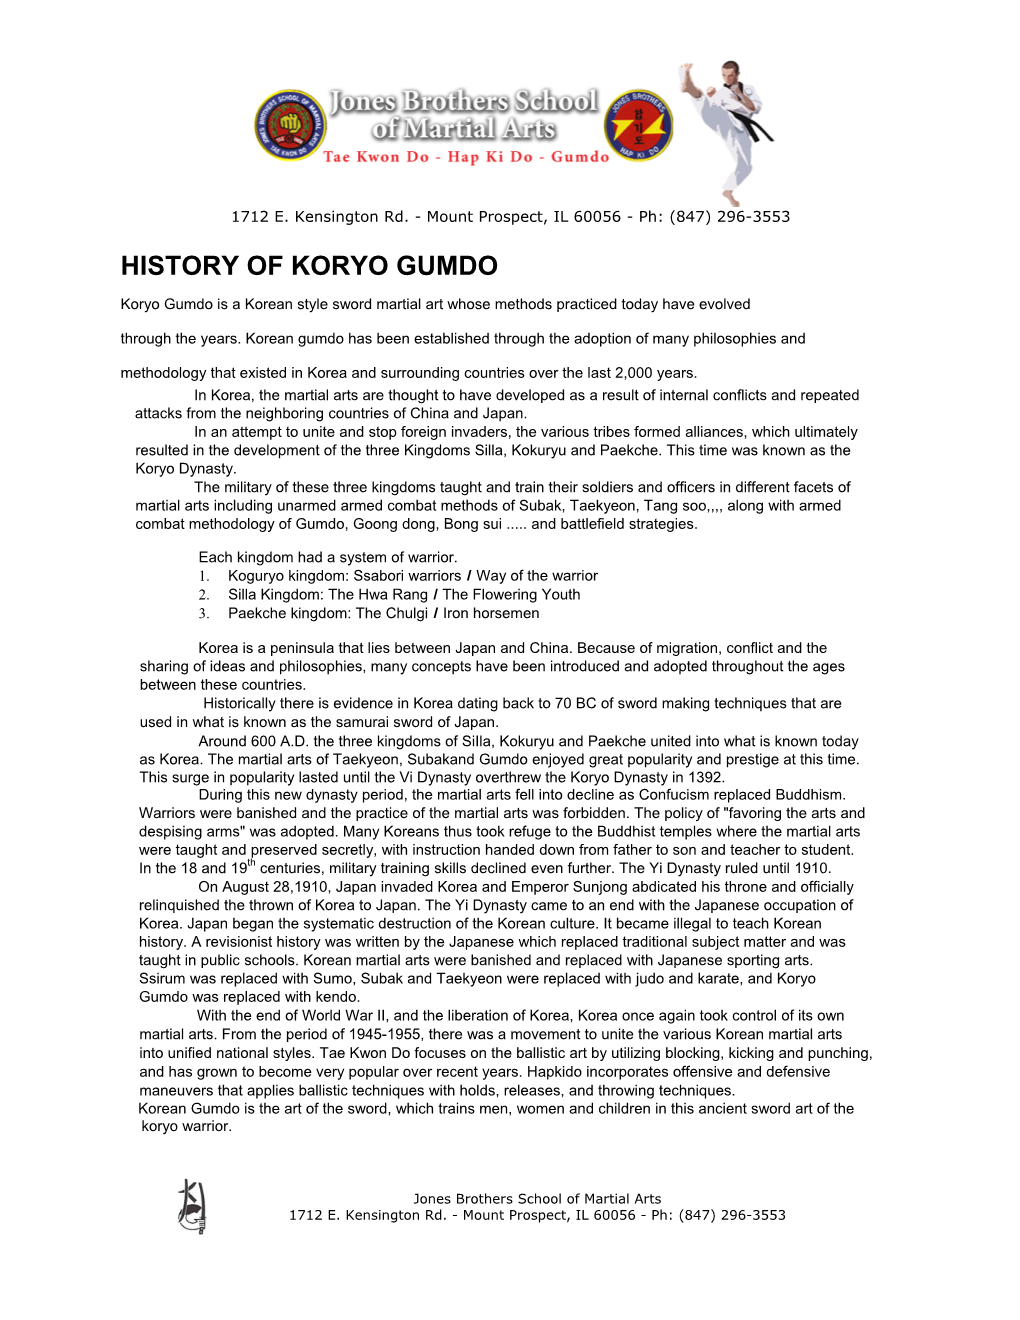 History of Koryo Gumdo